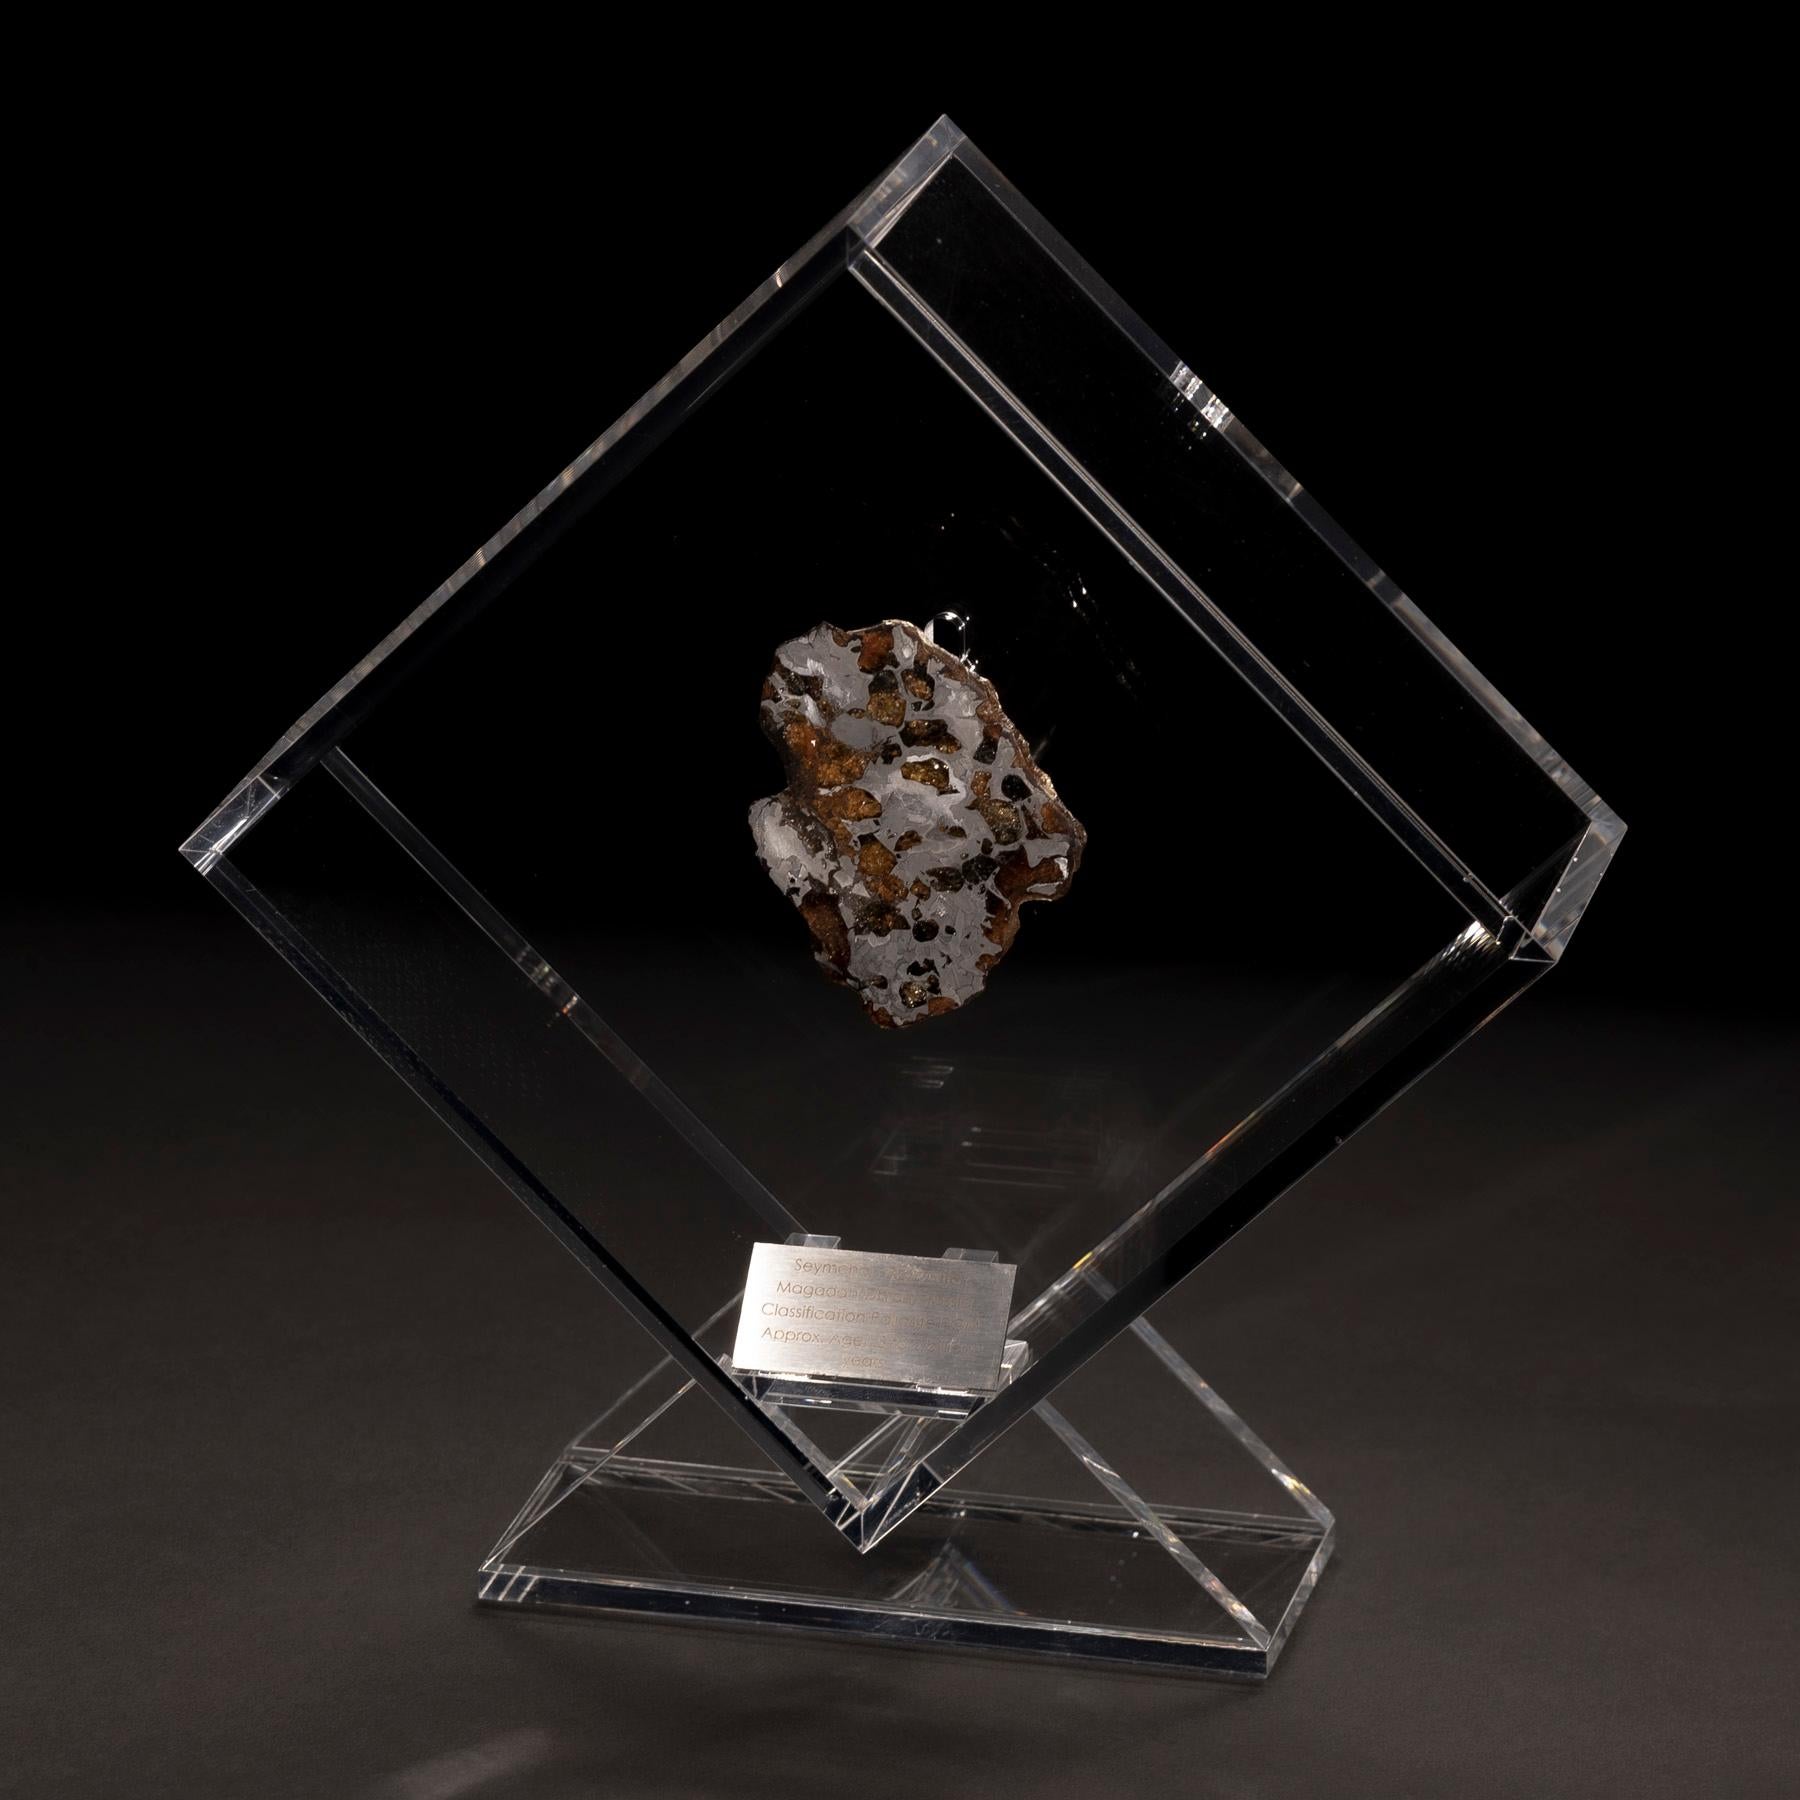 Contemporary Original Design, Seymchan with Olivine Meteorite in a Acrylic Display